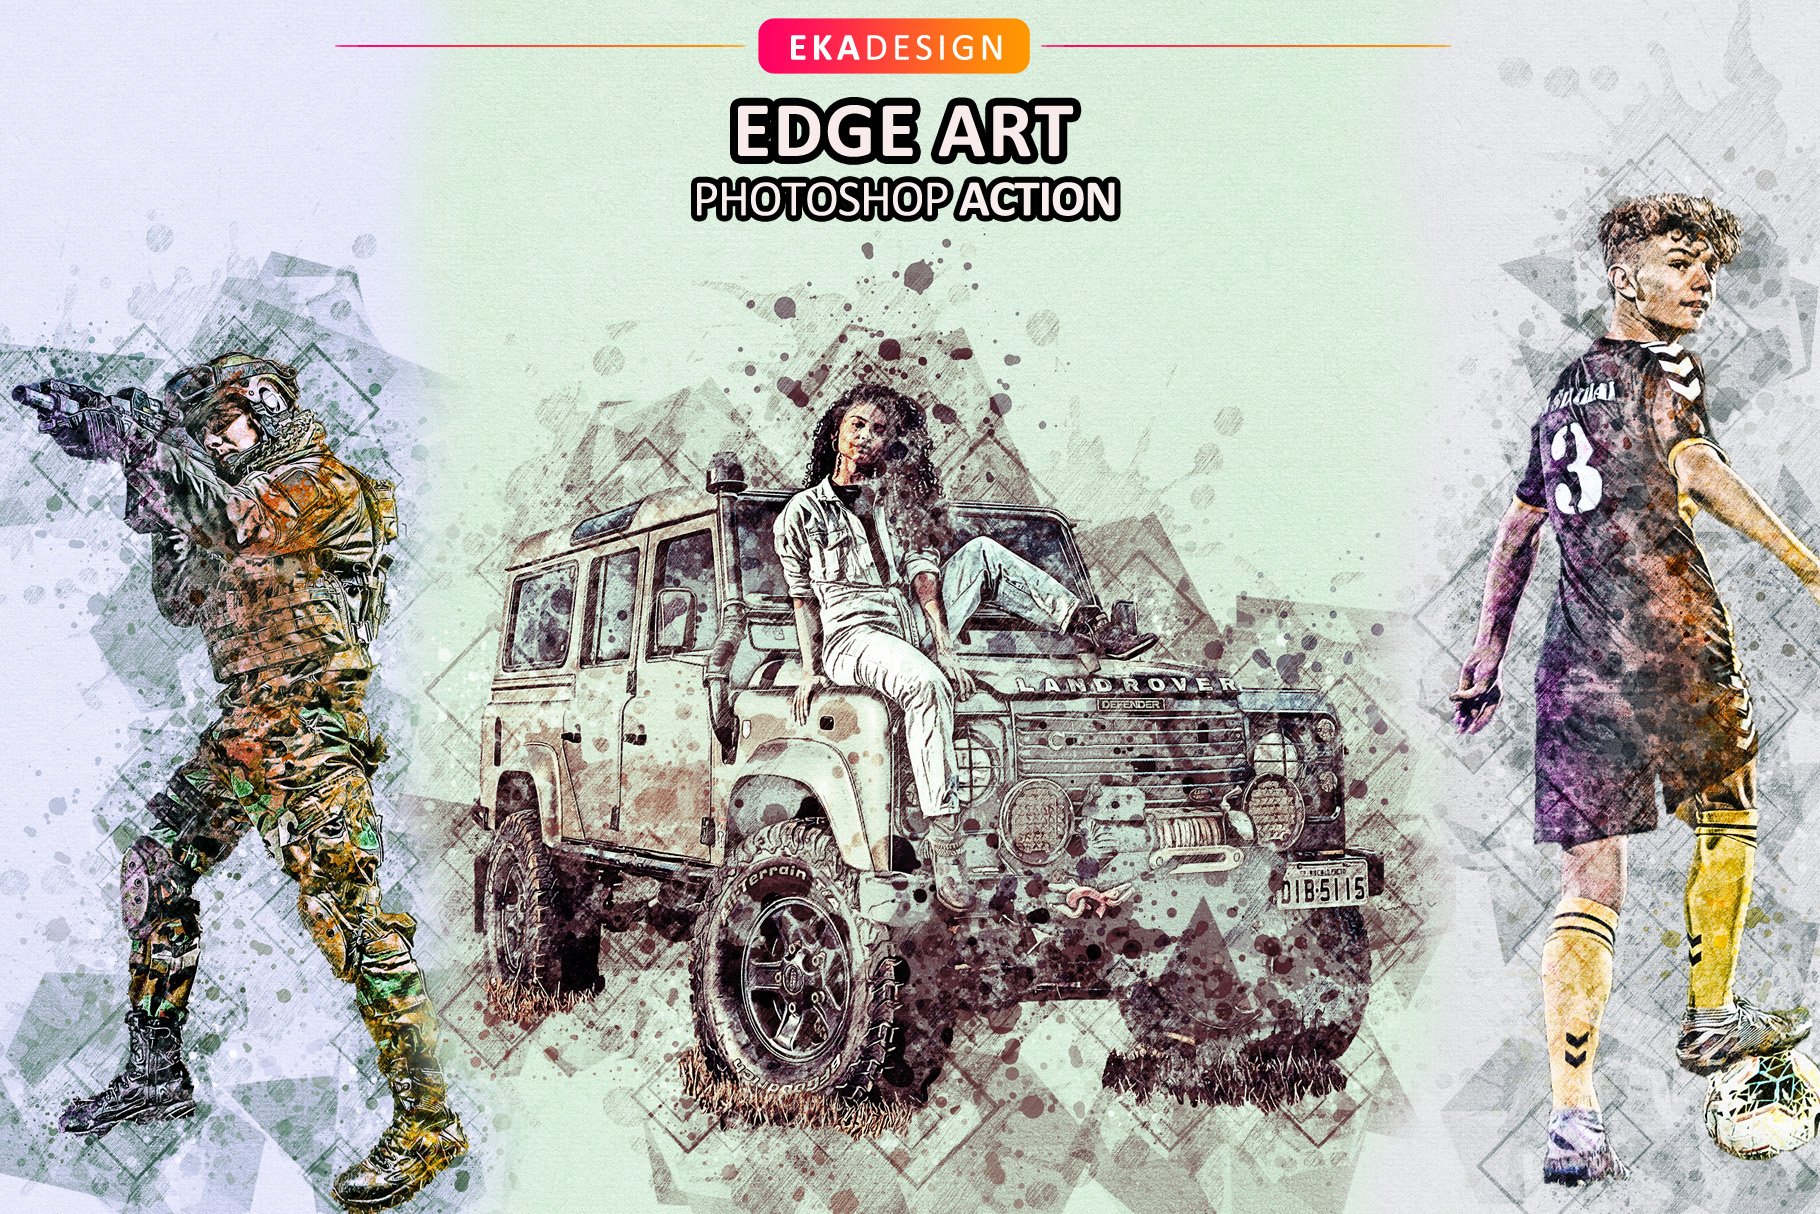 Edge Art Photoshop Actioncover image.